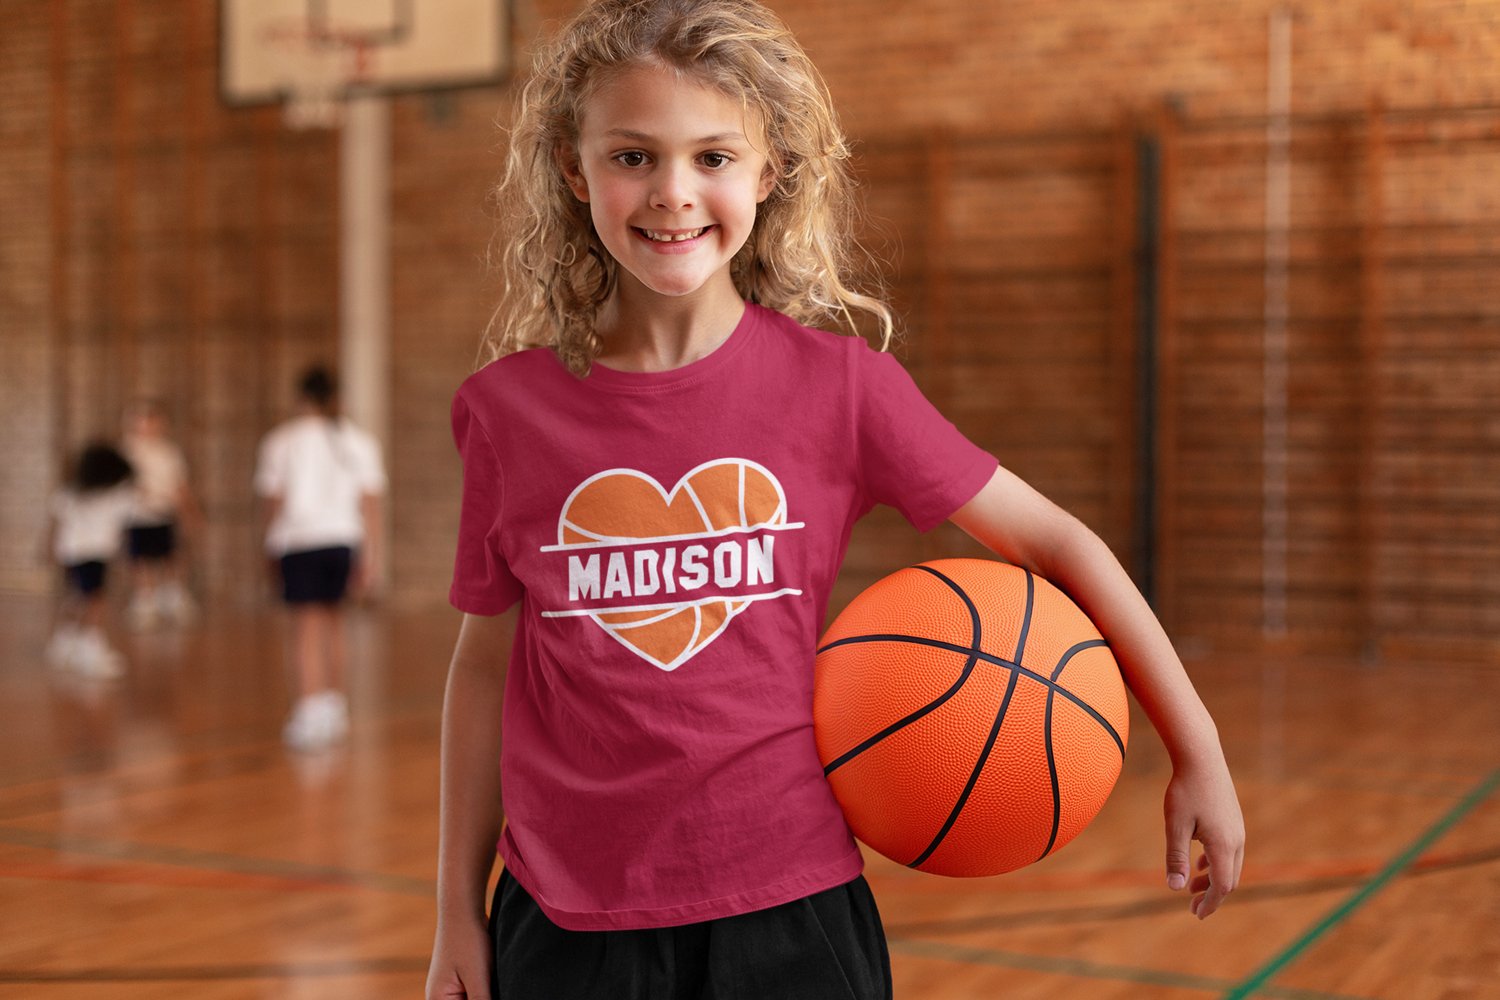 T-shirt mockup of a happy girl at basketball practice.